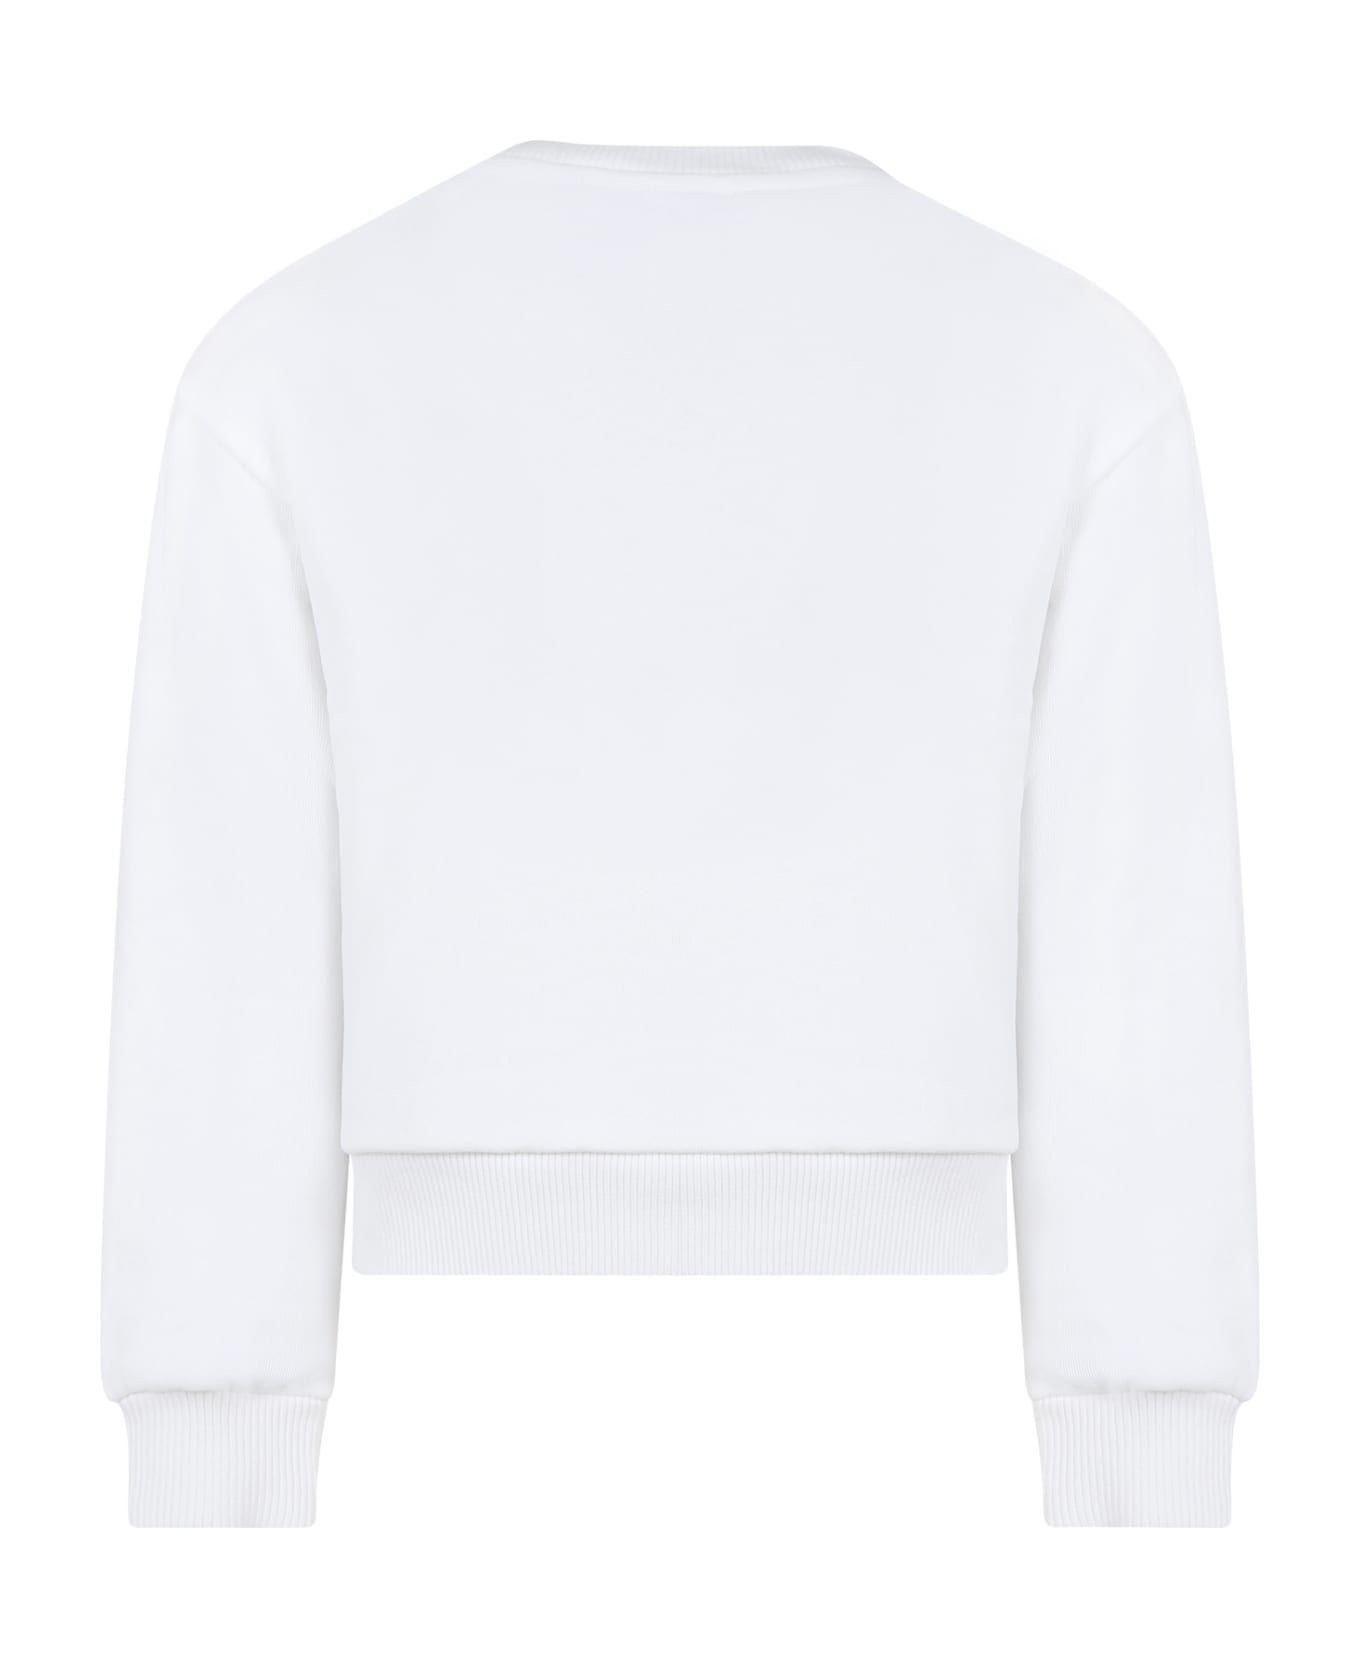 Dolce & Gabbana Whit Sweatshirt For Kids With Iconic Monogram - Bianco Ottico